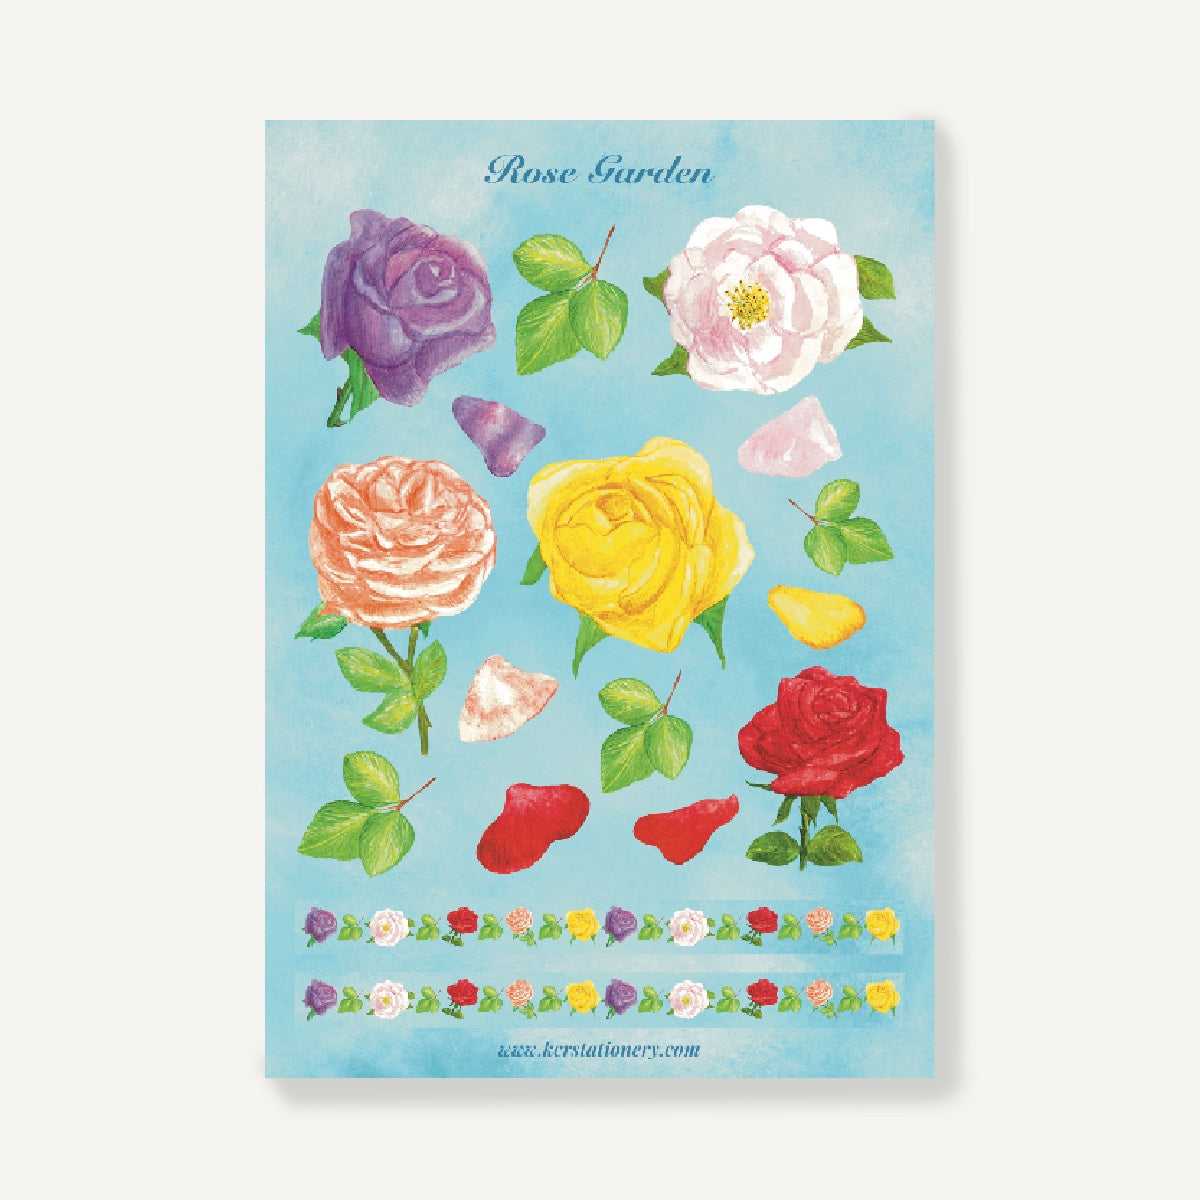 Rose garden decorative sticker sheet in sky blue on a plain background 